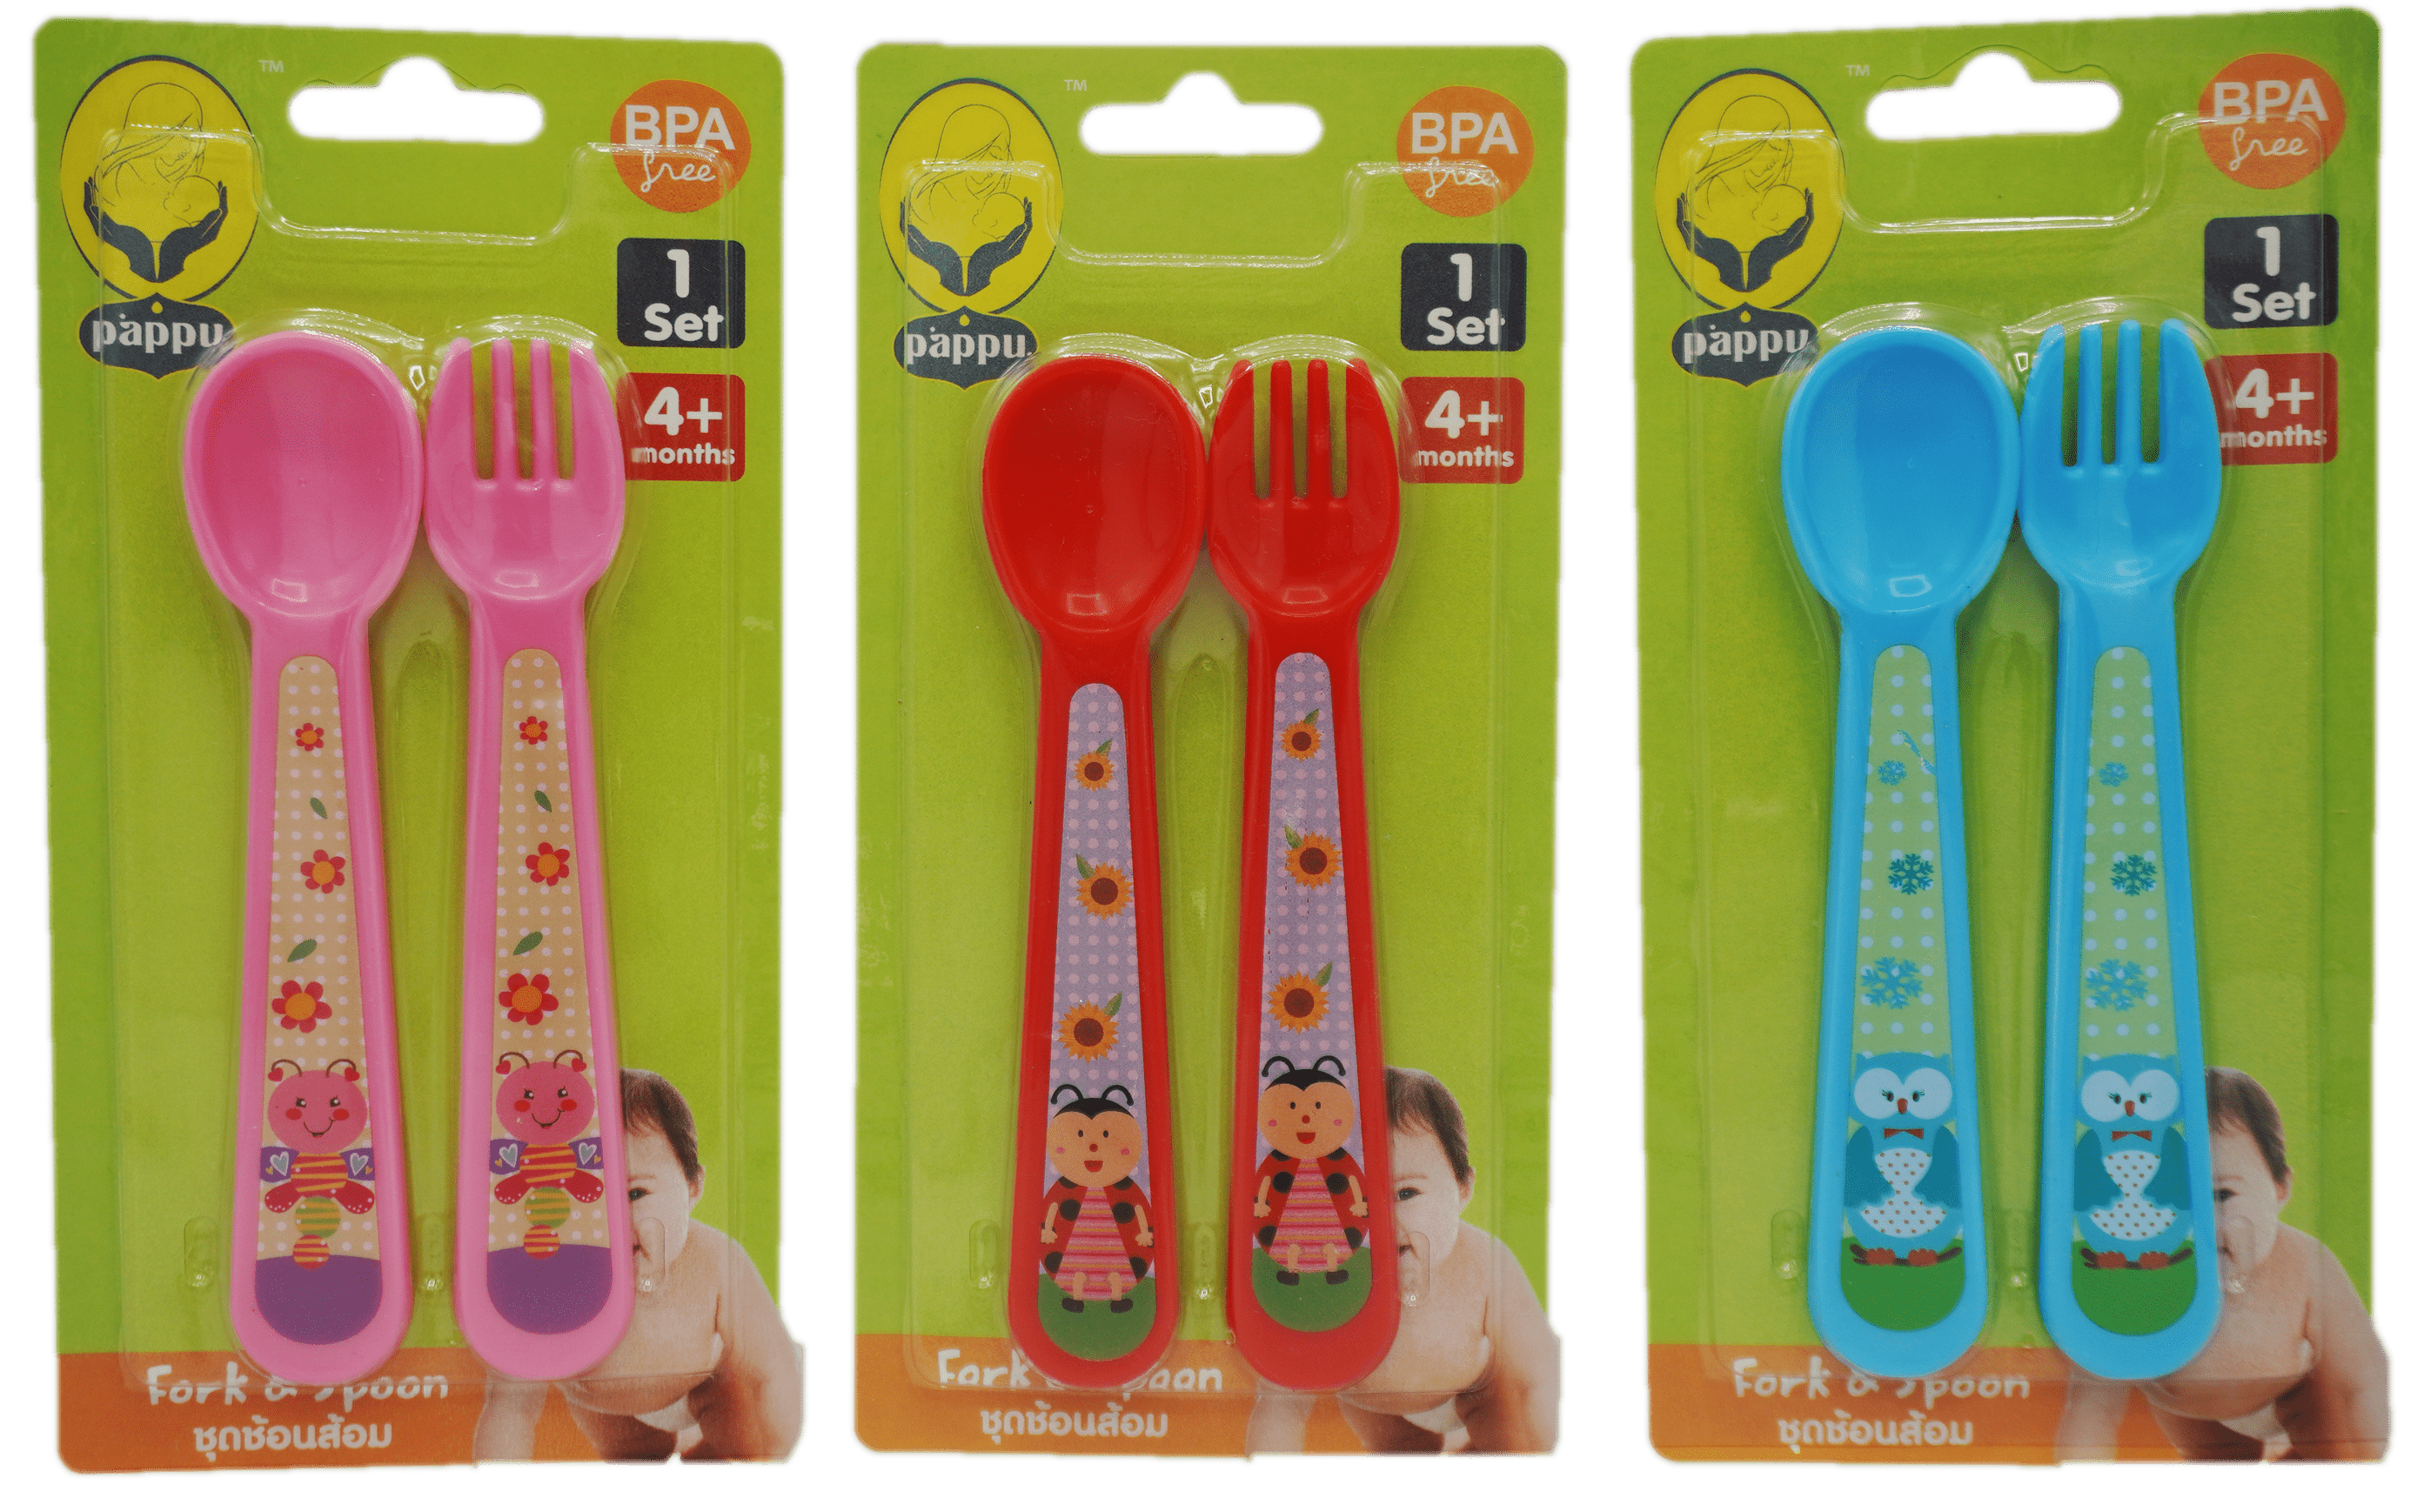 Fork & spoon set